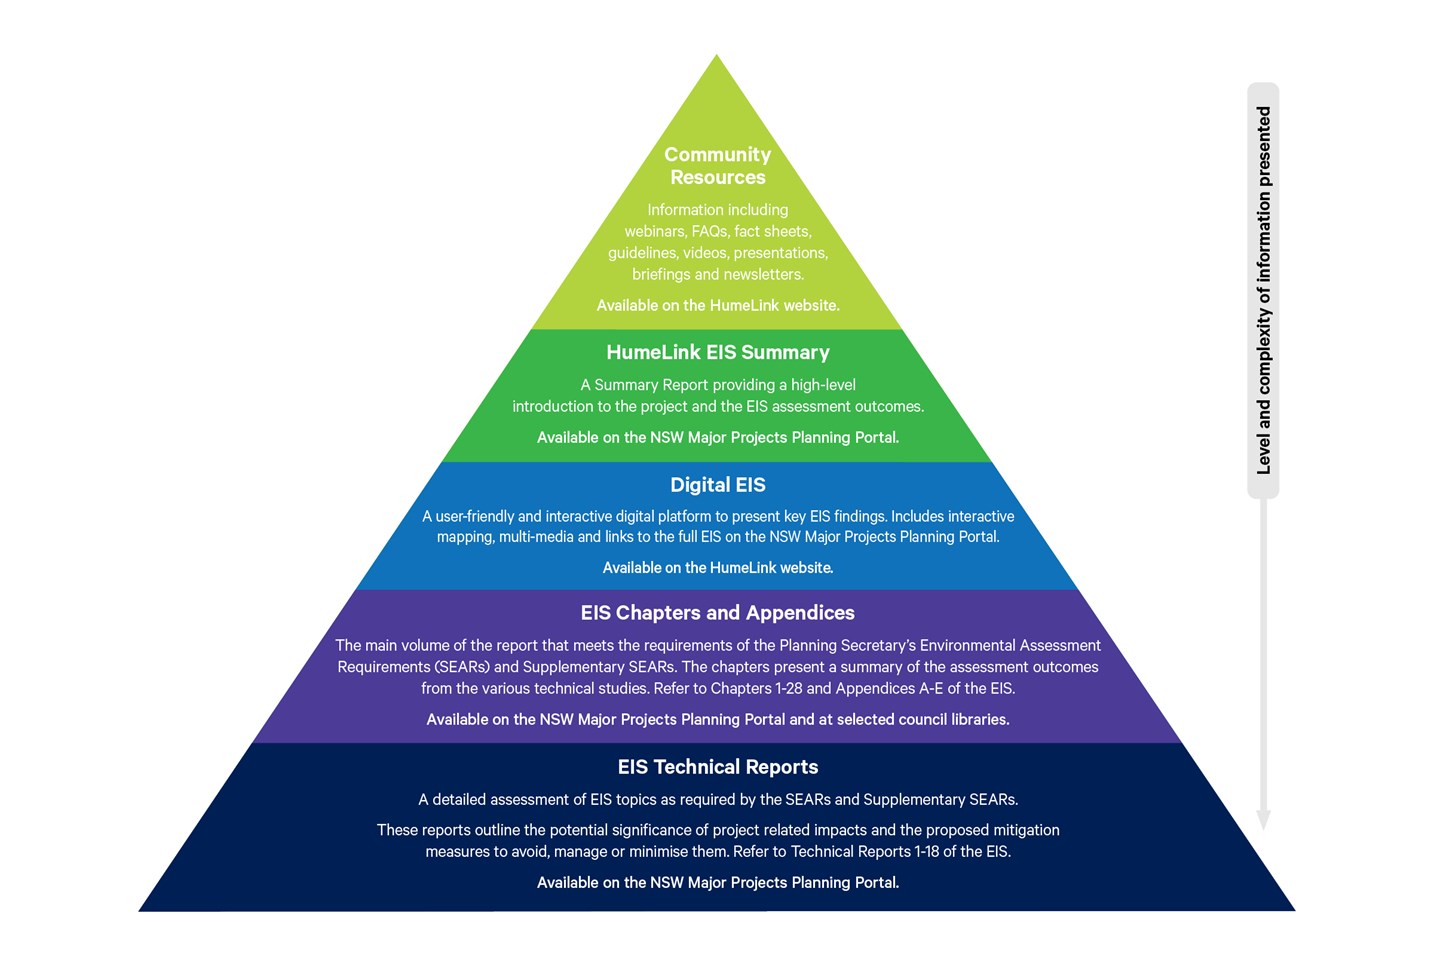 EIS Information Diagram_pyramid_2400x1600_R12